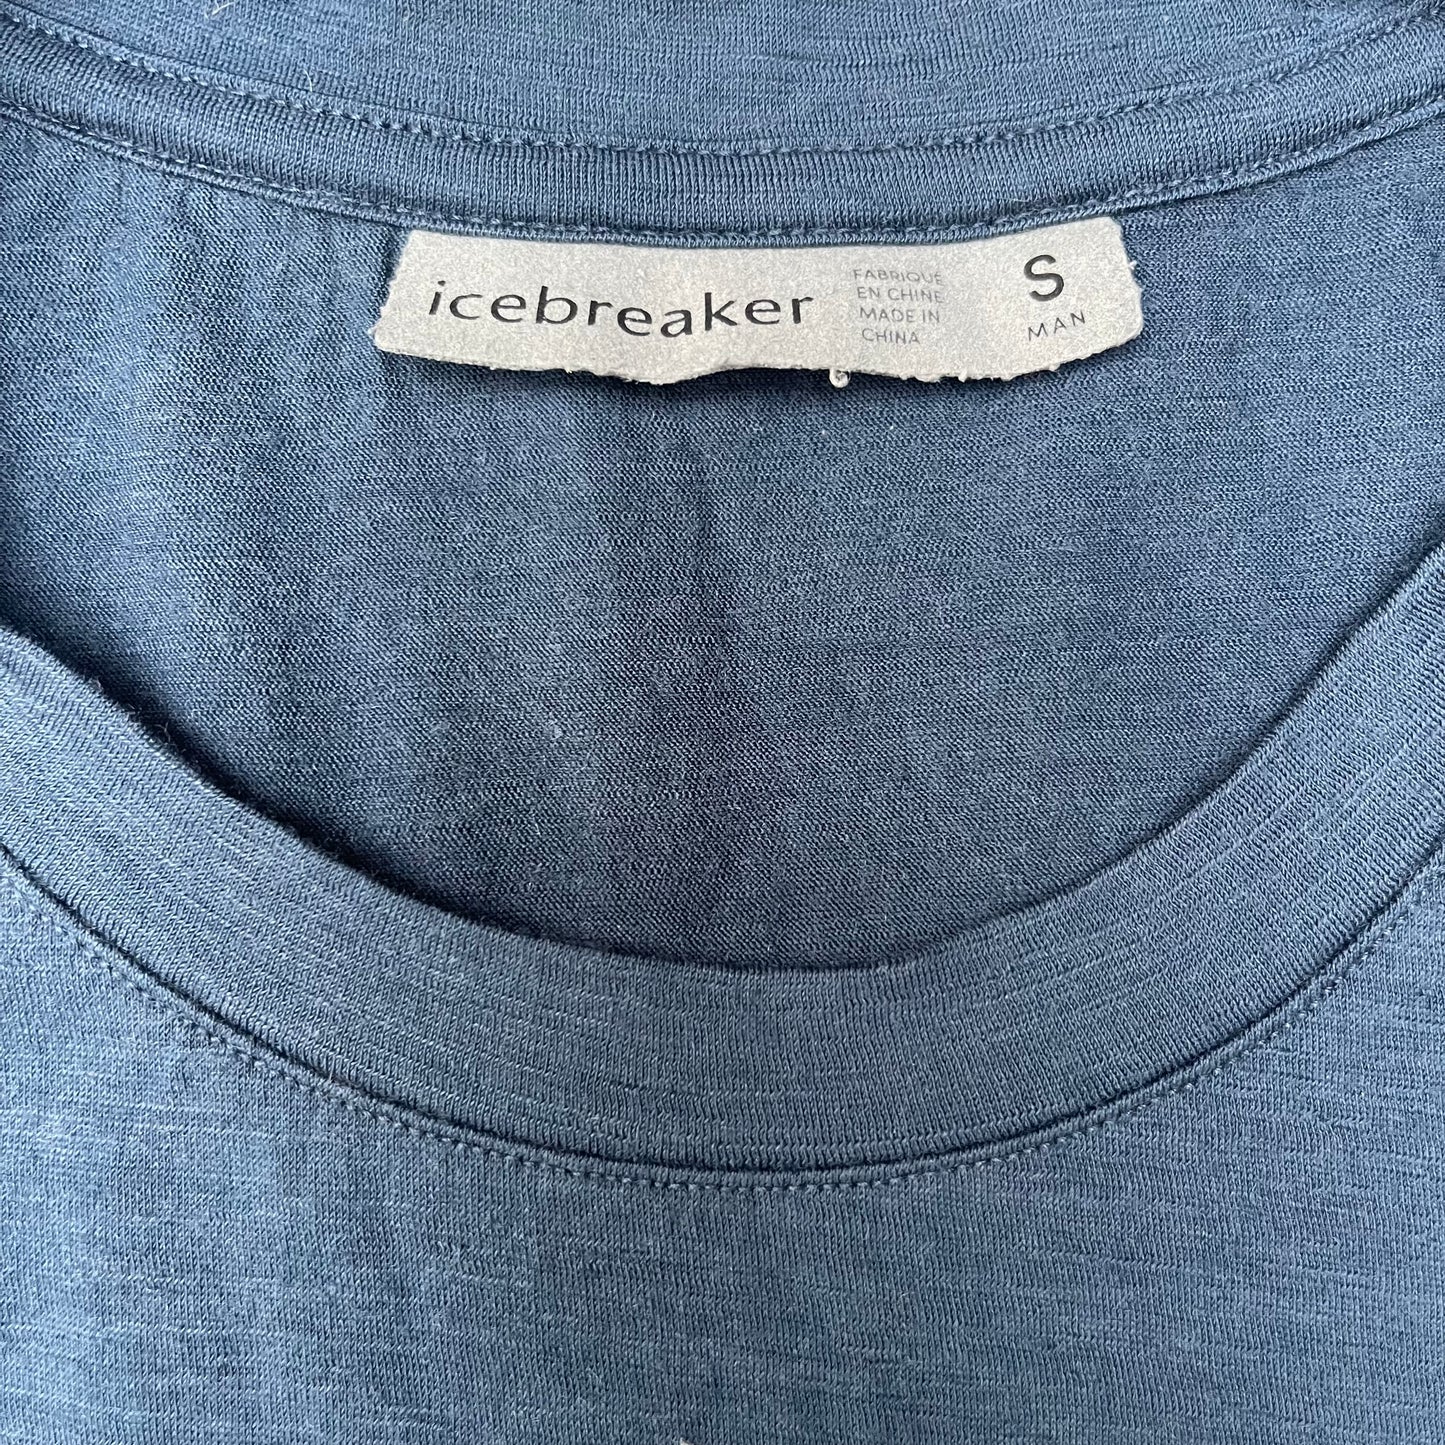 Funktions- T-Shirt von Icebreaker Merino S Herren - blau